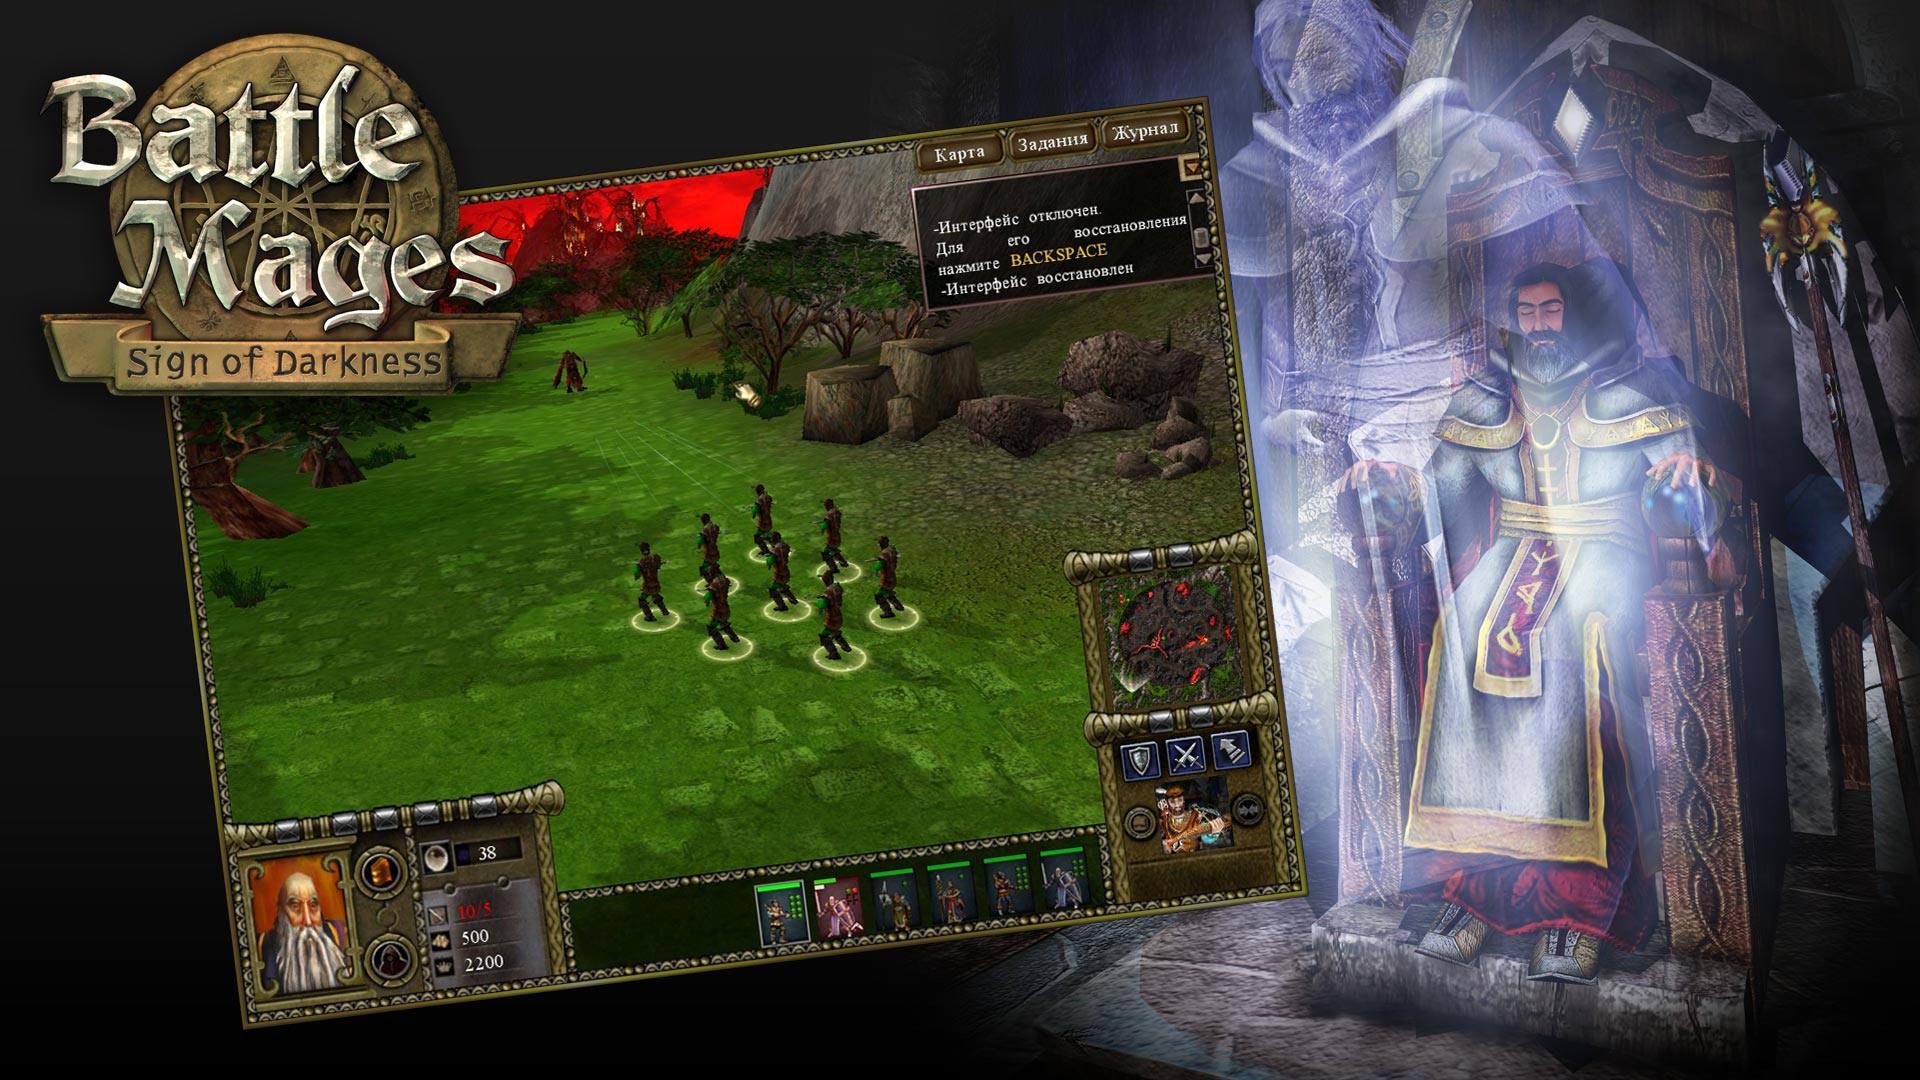 Battle Mages: Sign of Darkness screenshot